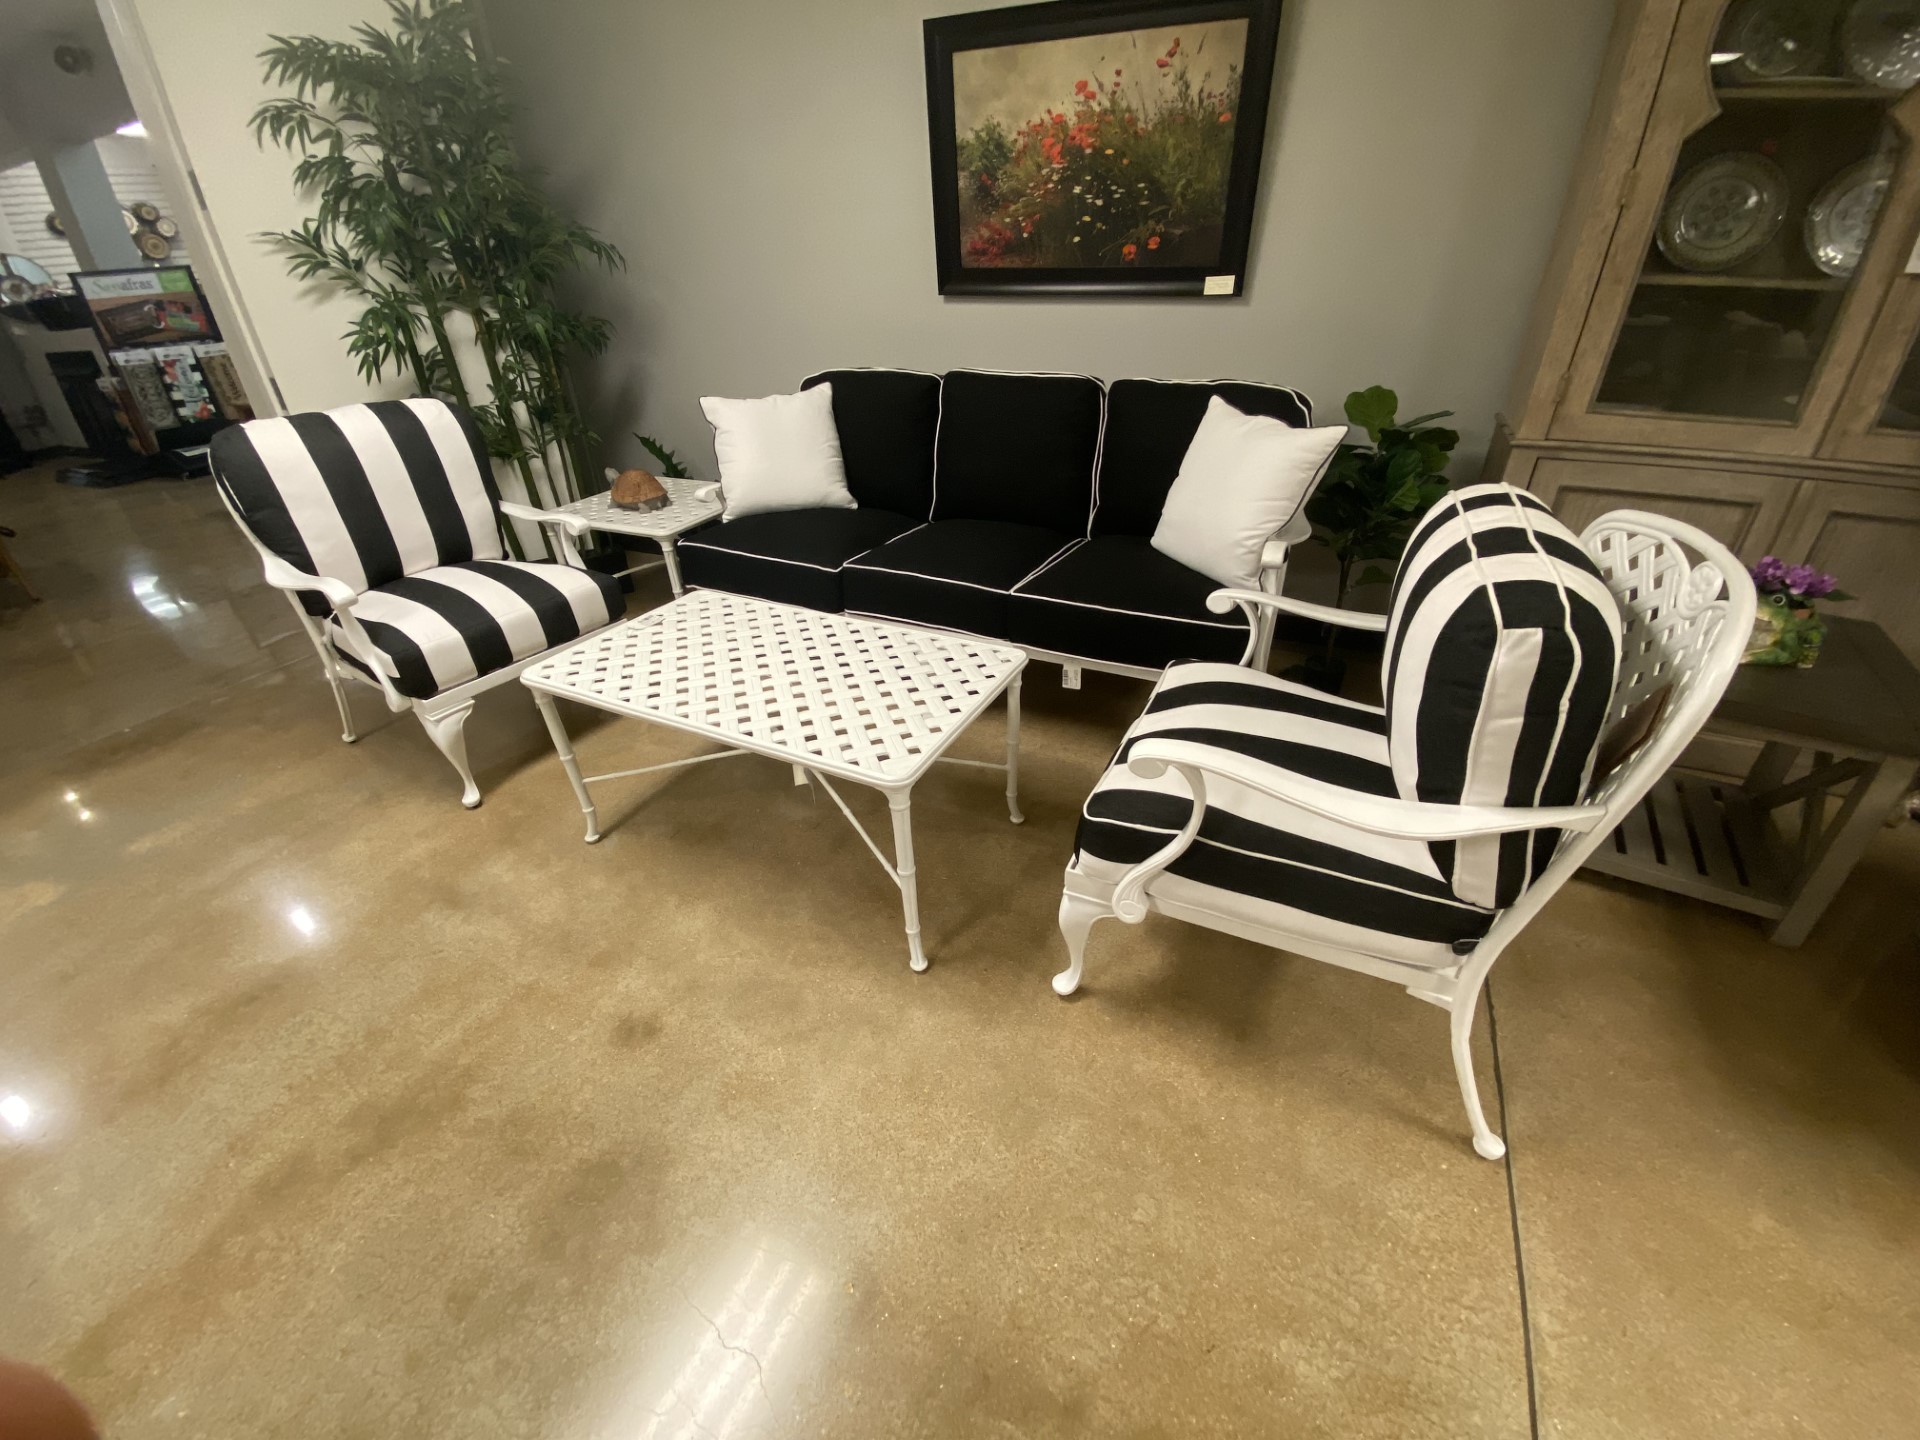 provance/calcutta seating set product image